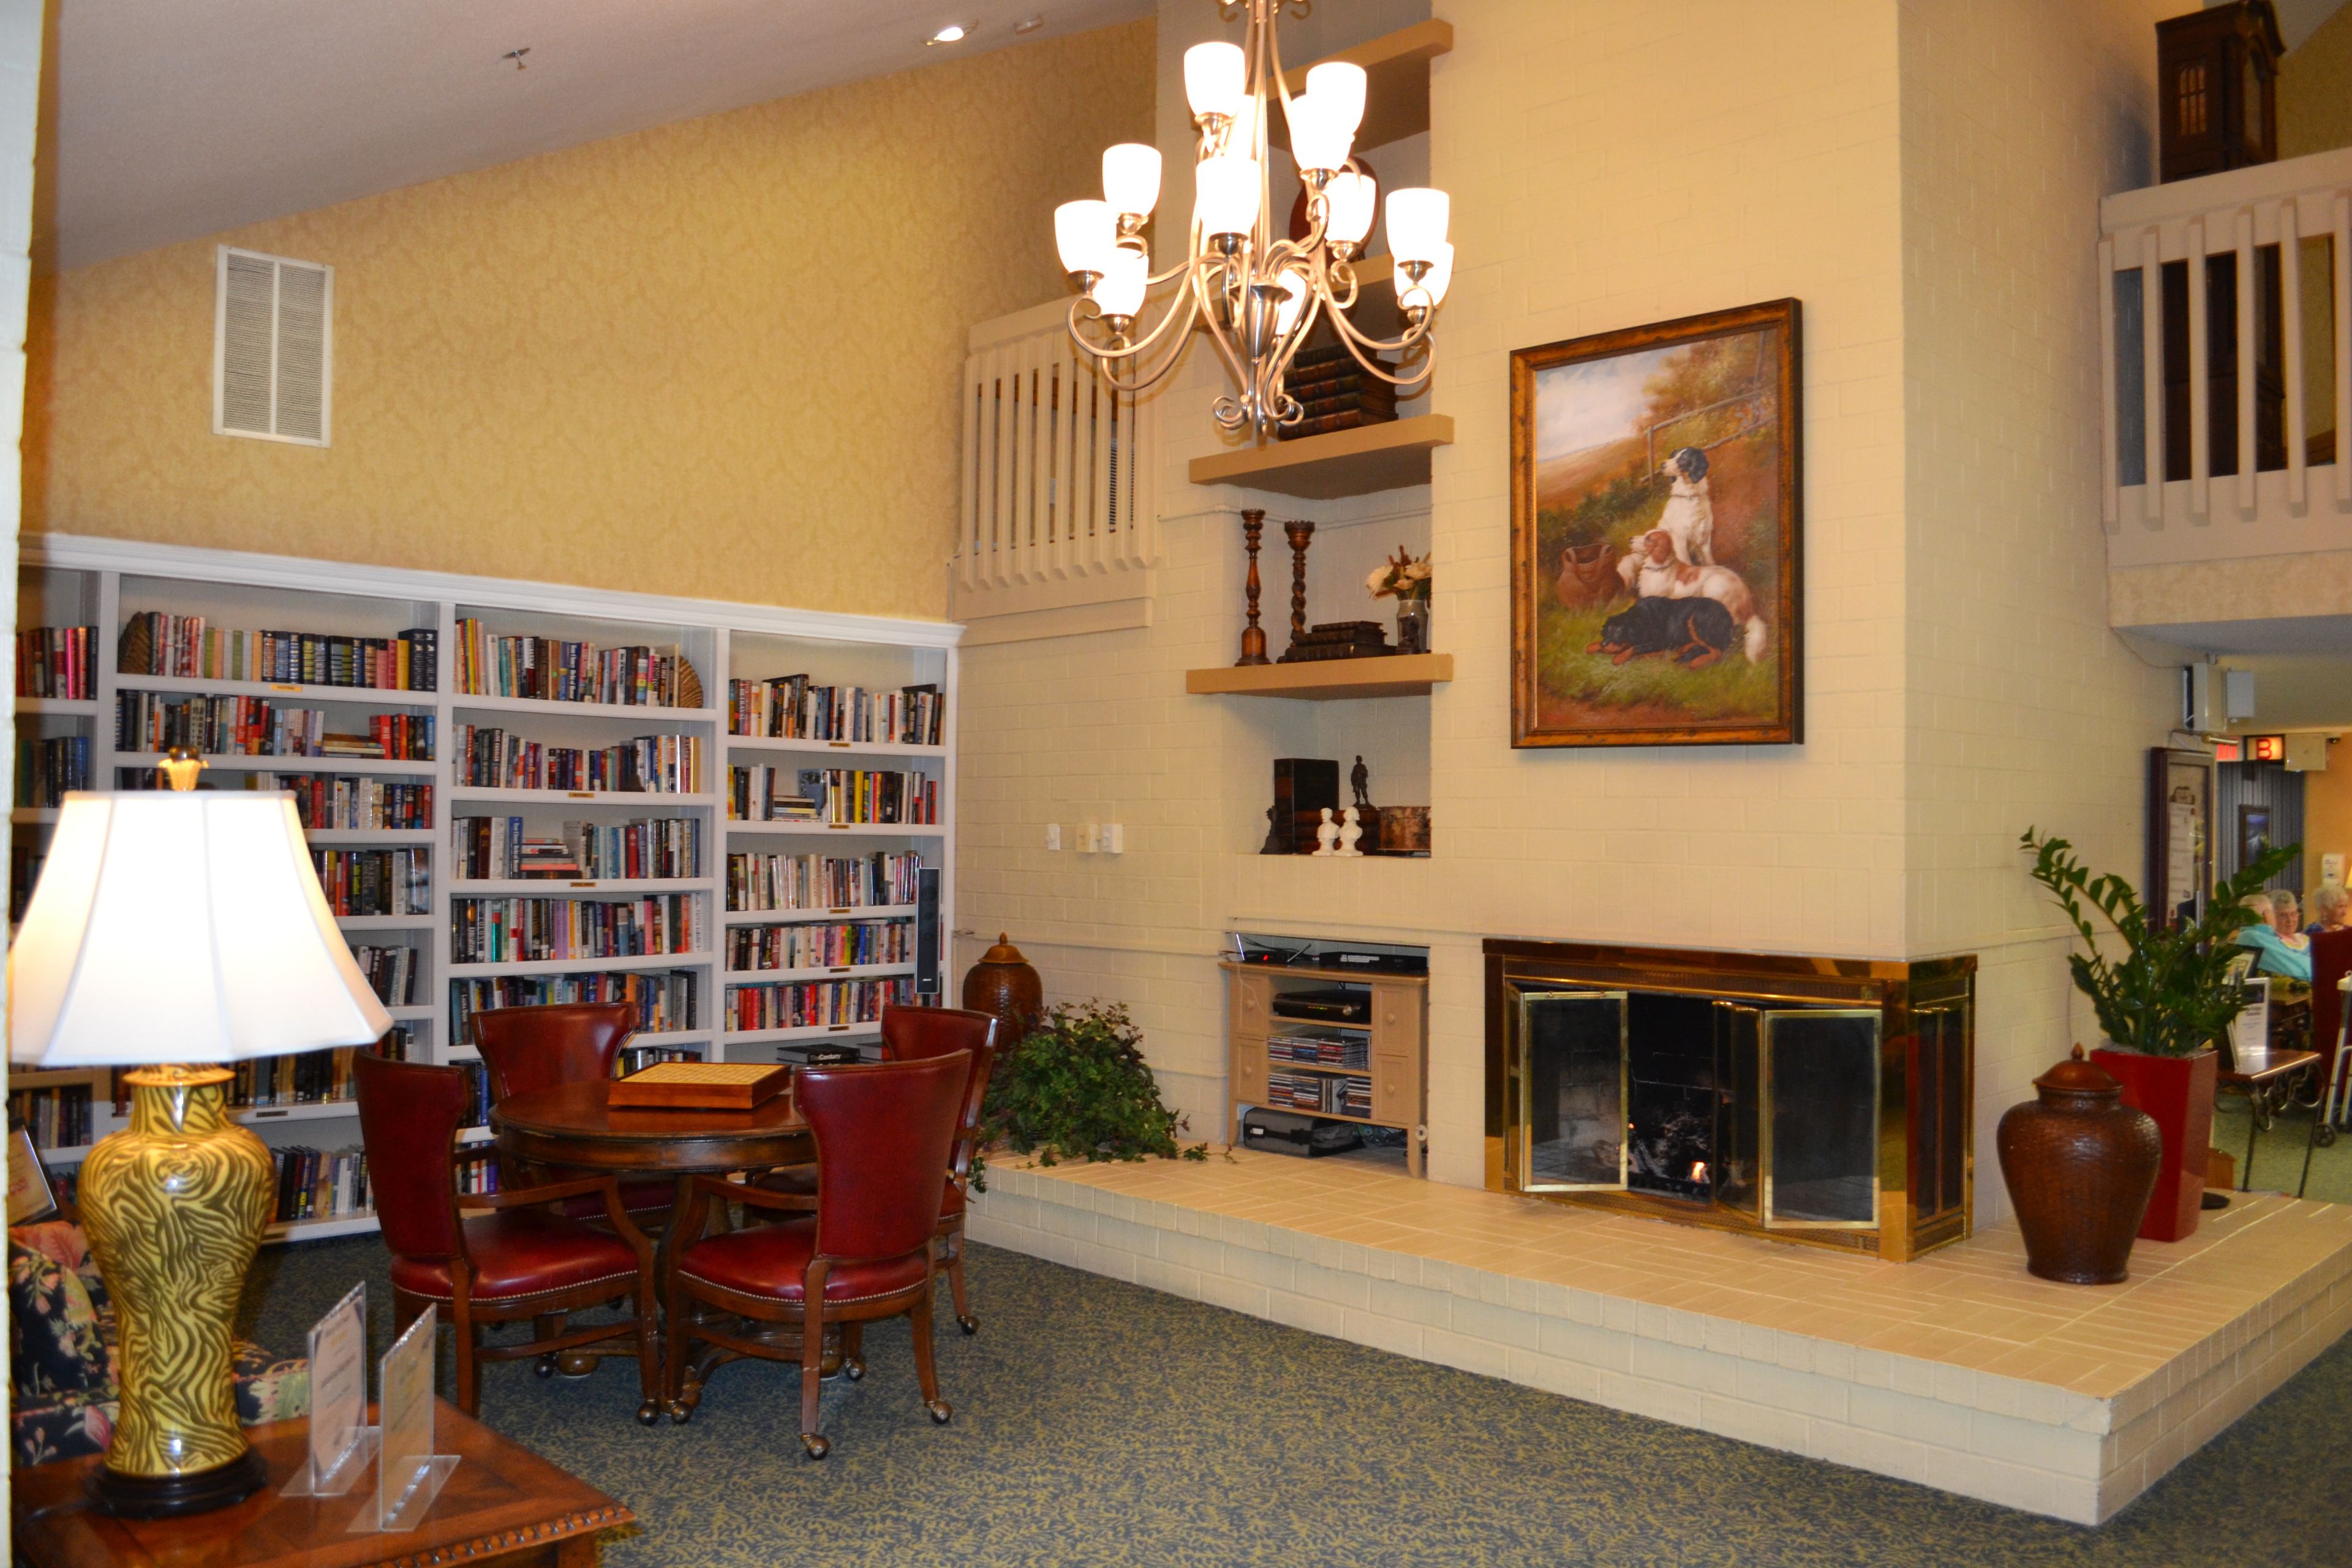 Senior living community interior at Independence Village Naperville featuring elegant decor and furniture.